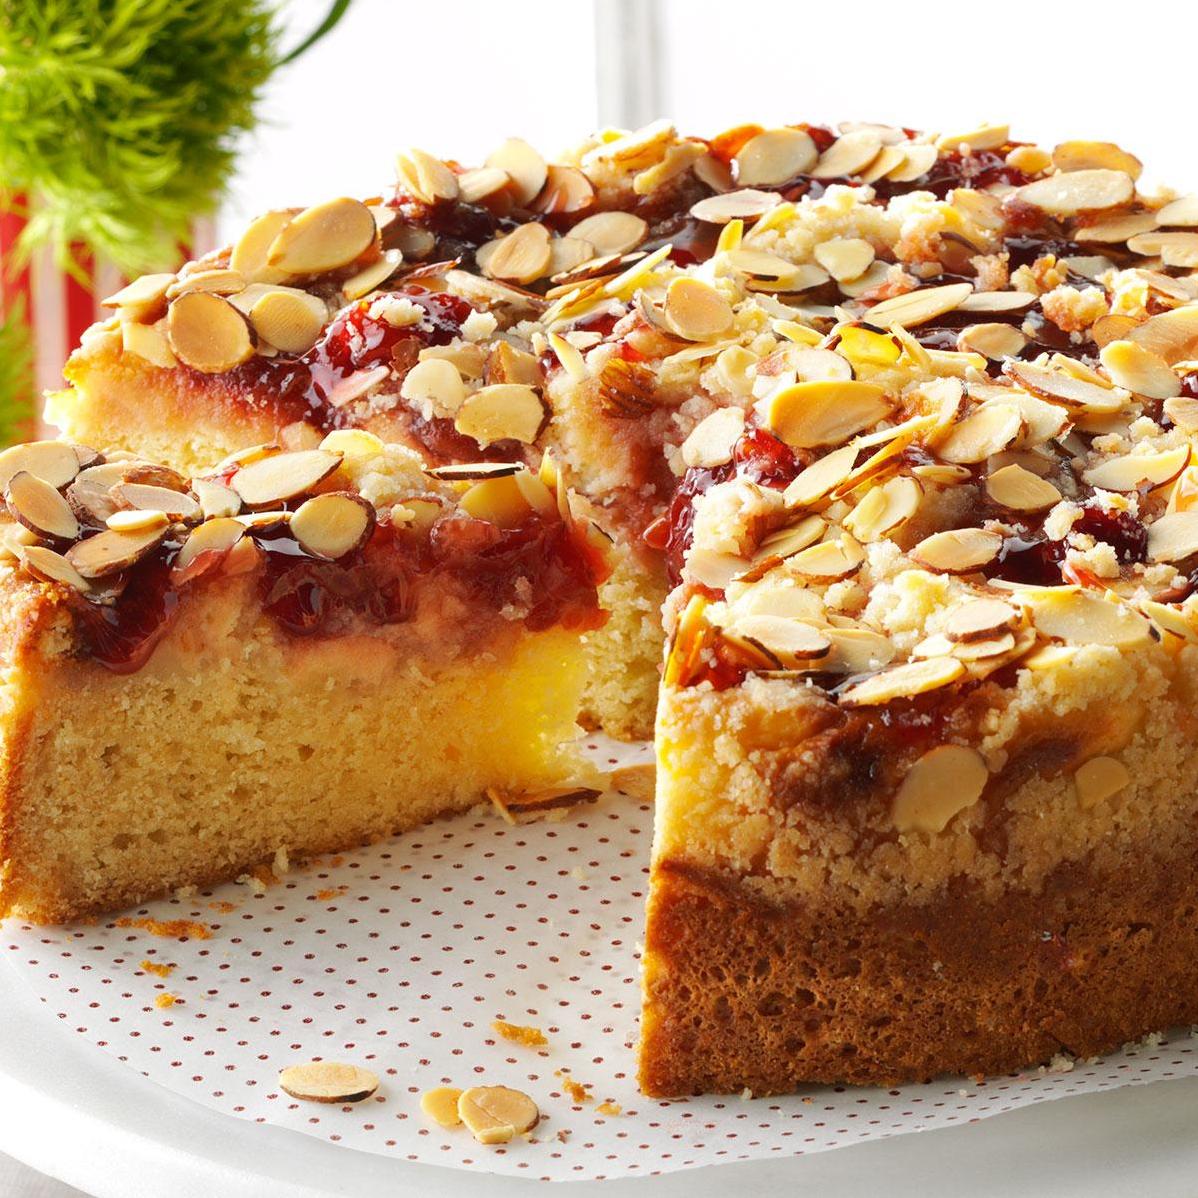 Cherry Nut Coffee Cake Recipe – Delicious Breakfast Treat